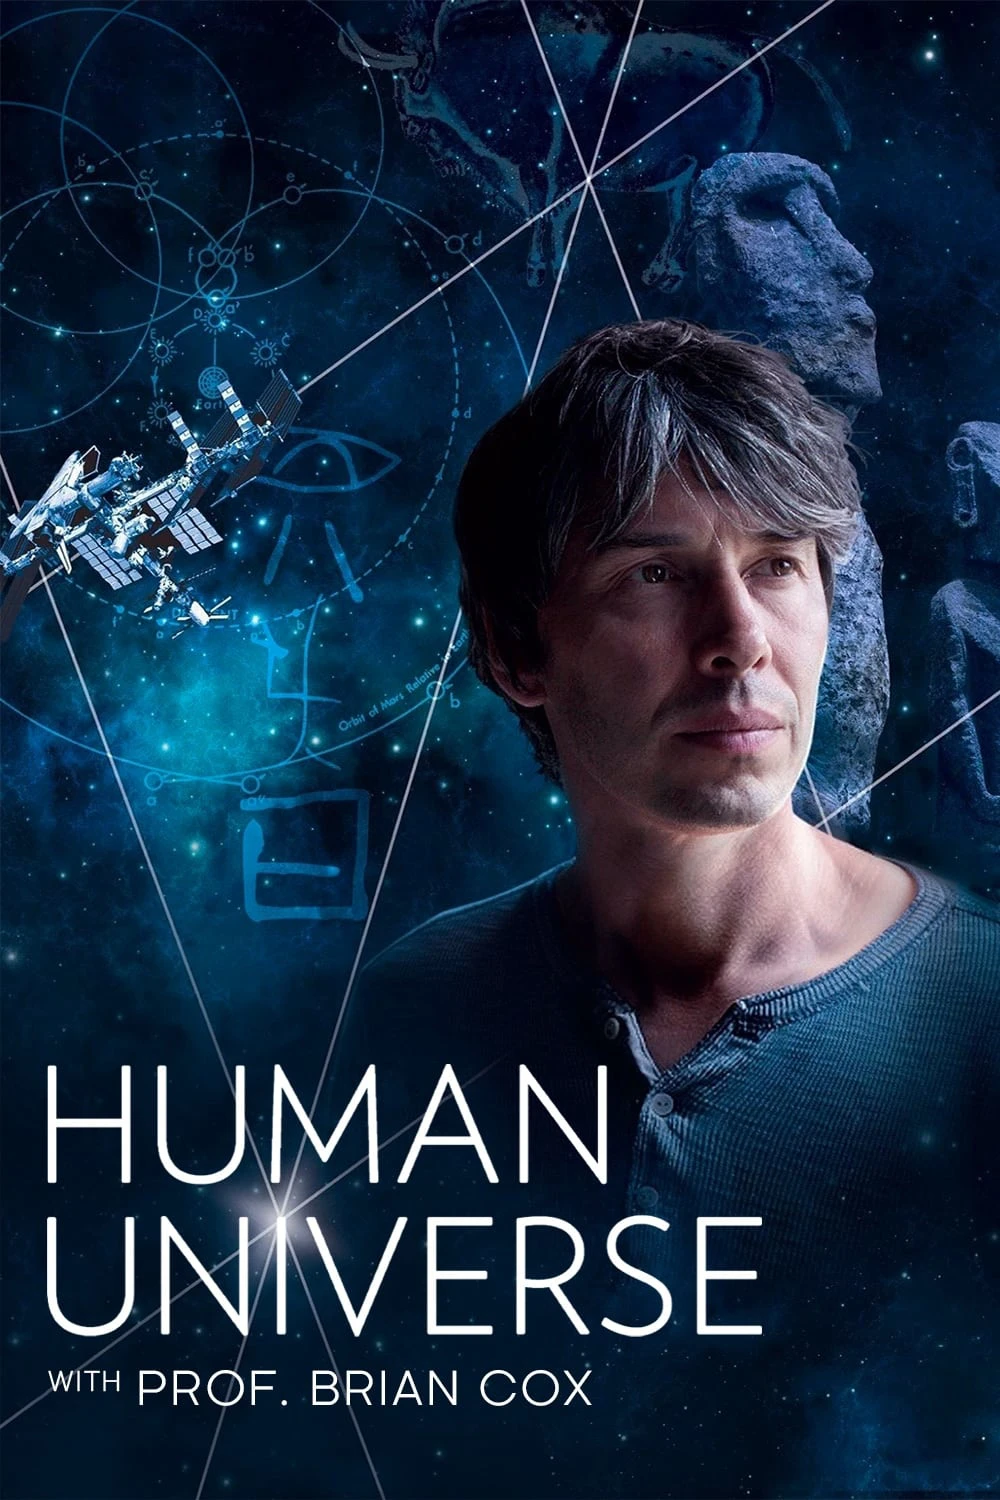 Human Universe | Human Universe (2014)